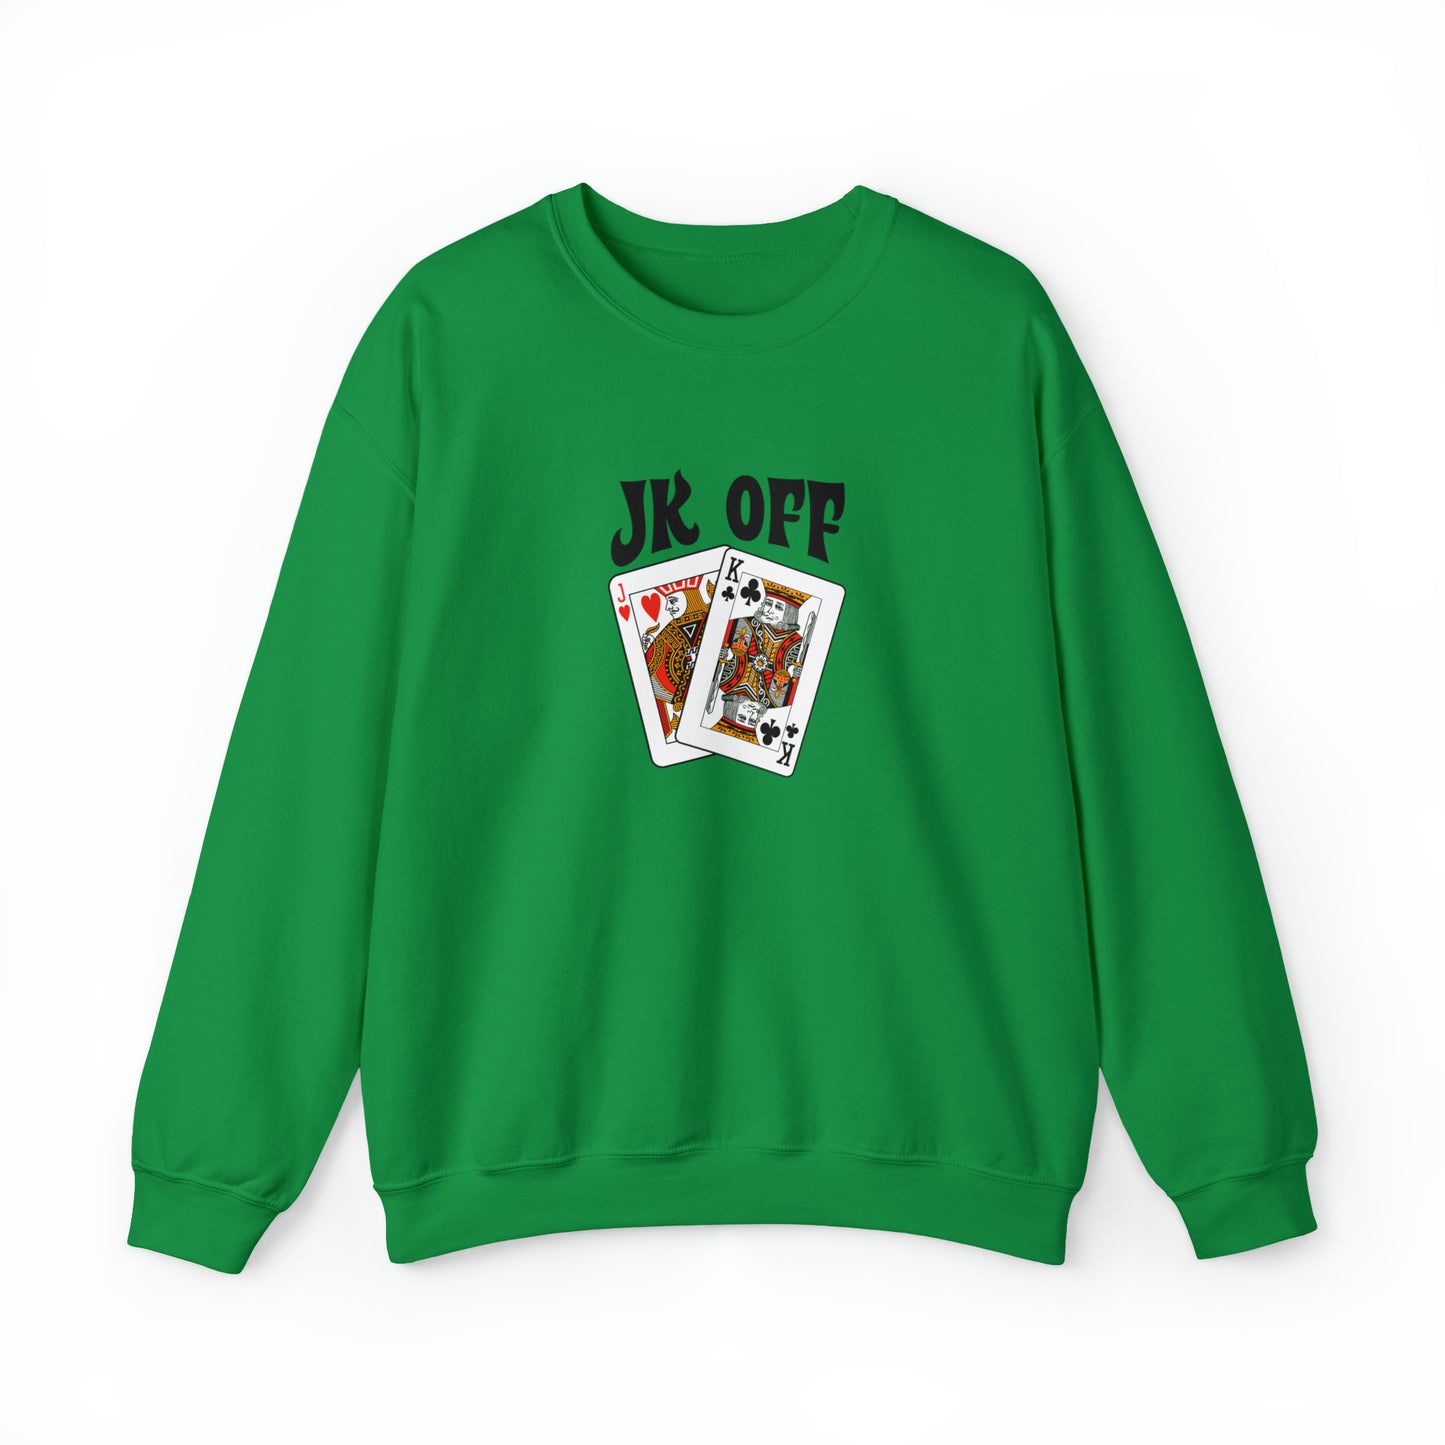 Custom Parody Crewneck Sweatshirt, JK off Design